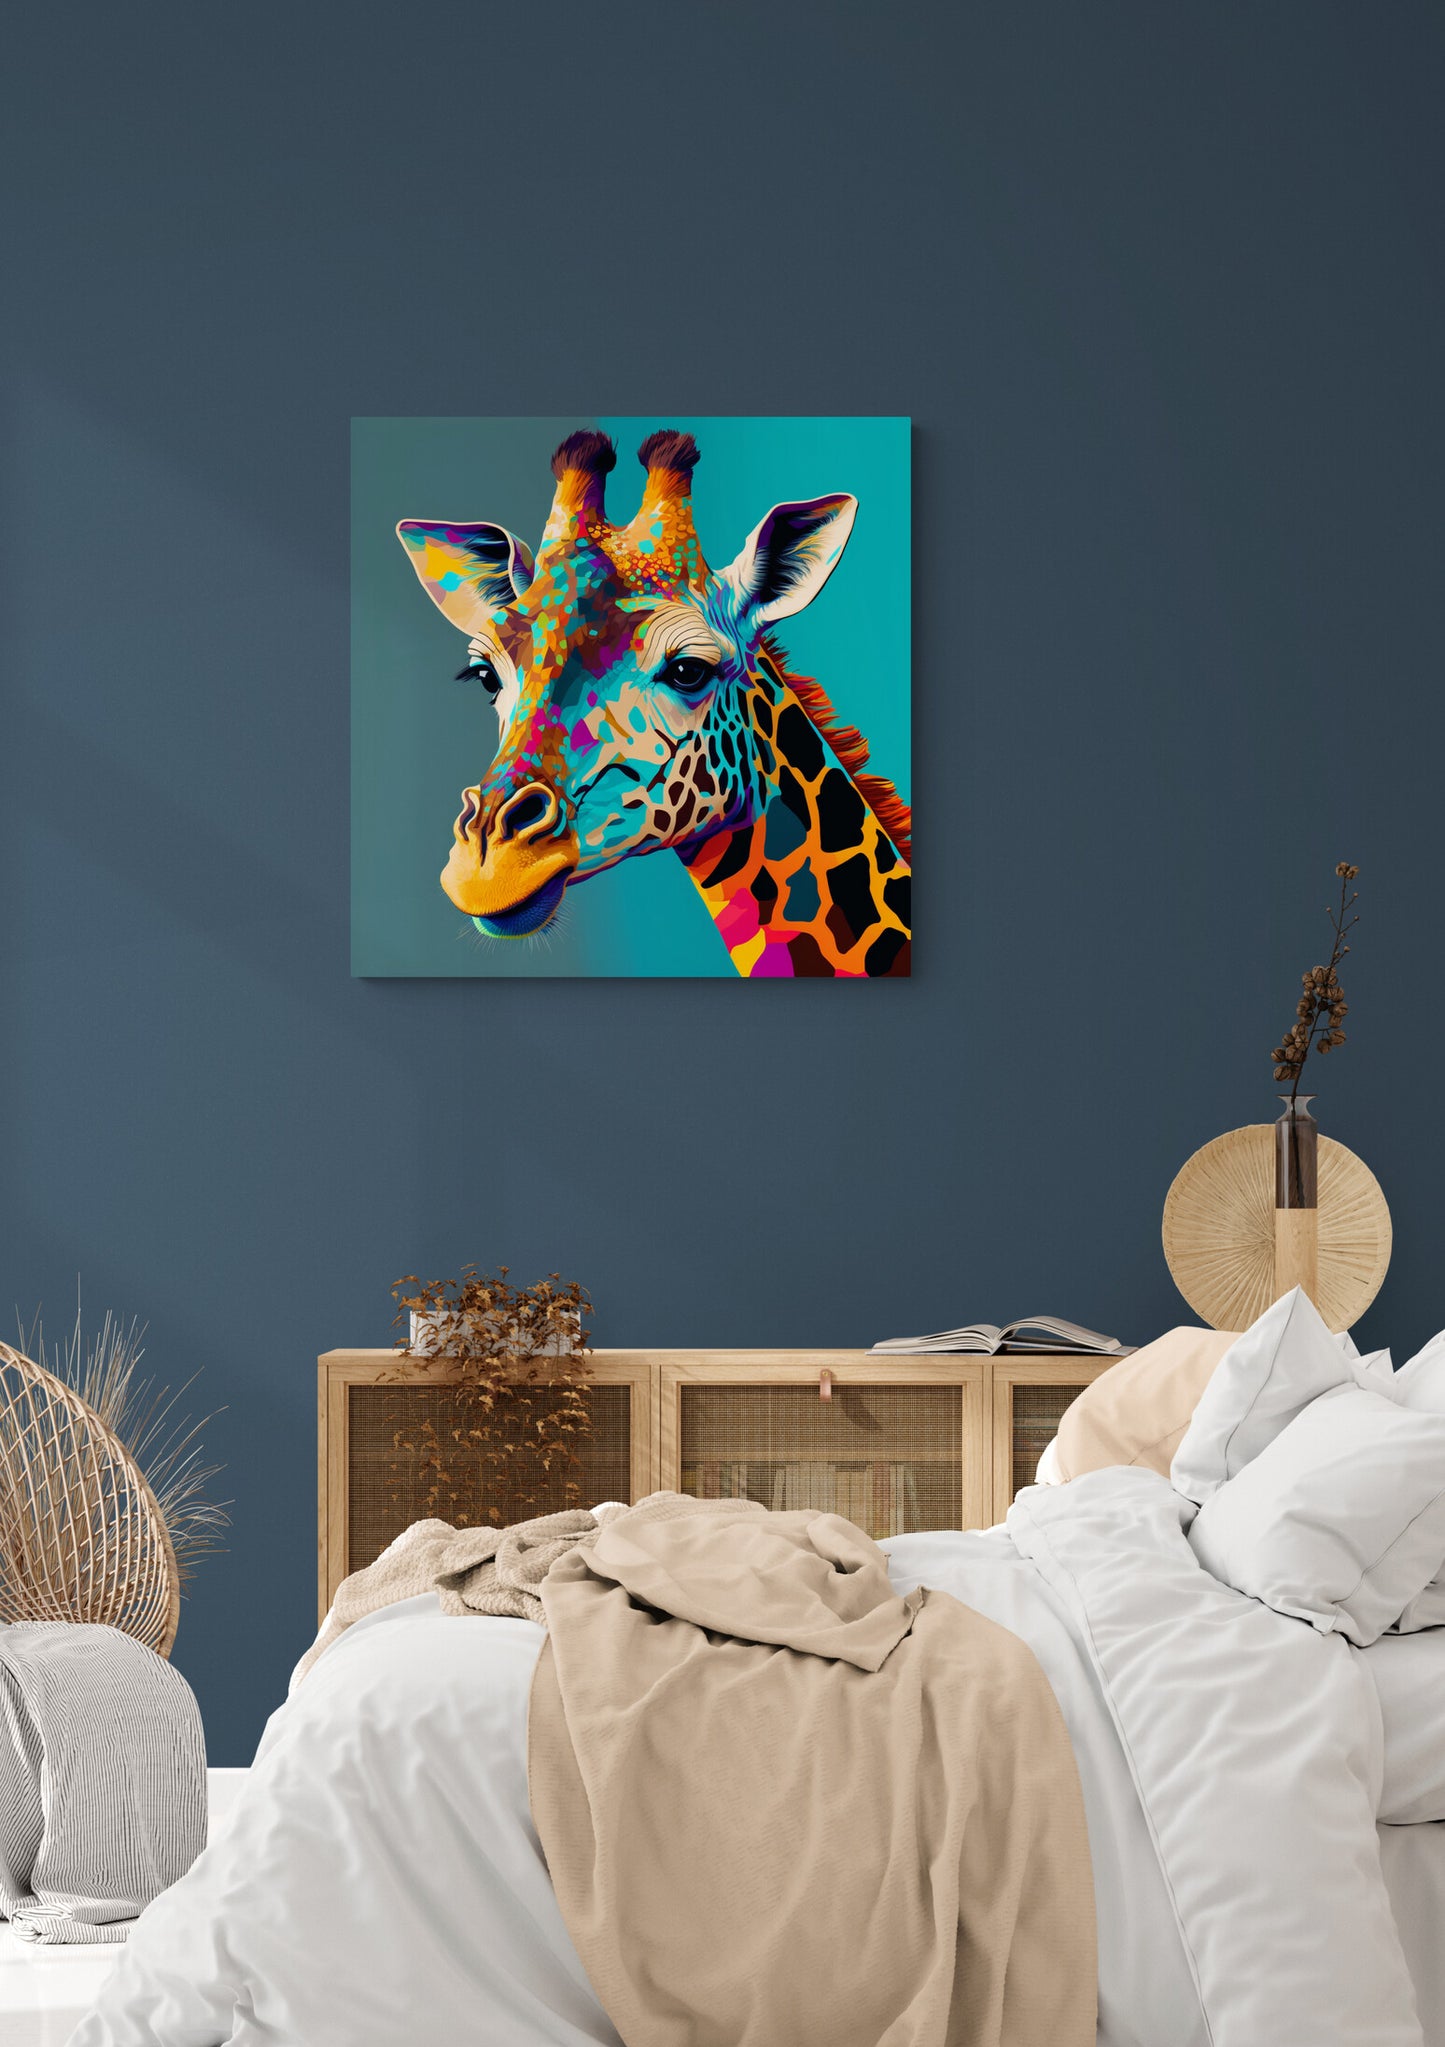 Tableau mural pop art, girafe coloré sur fond bleu